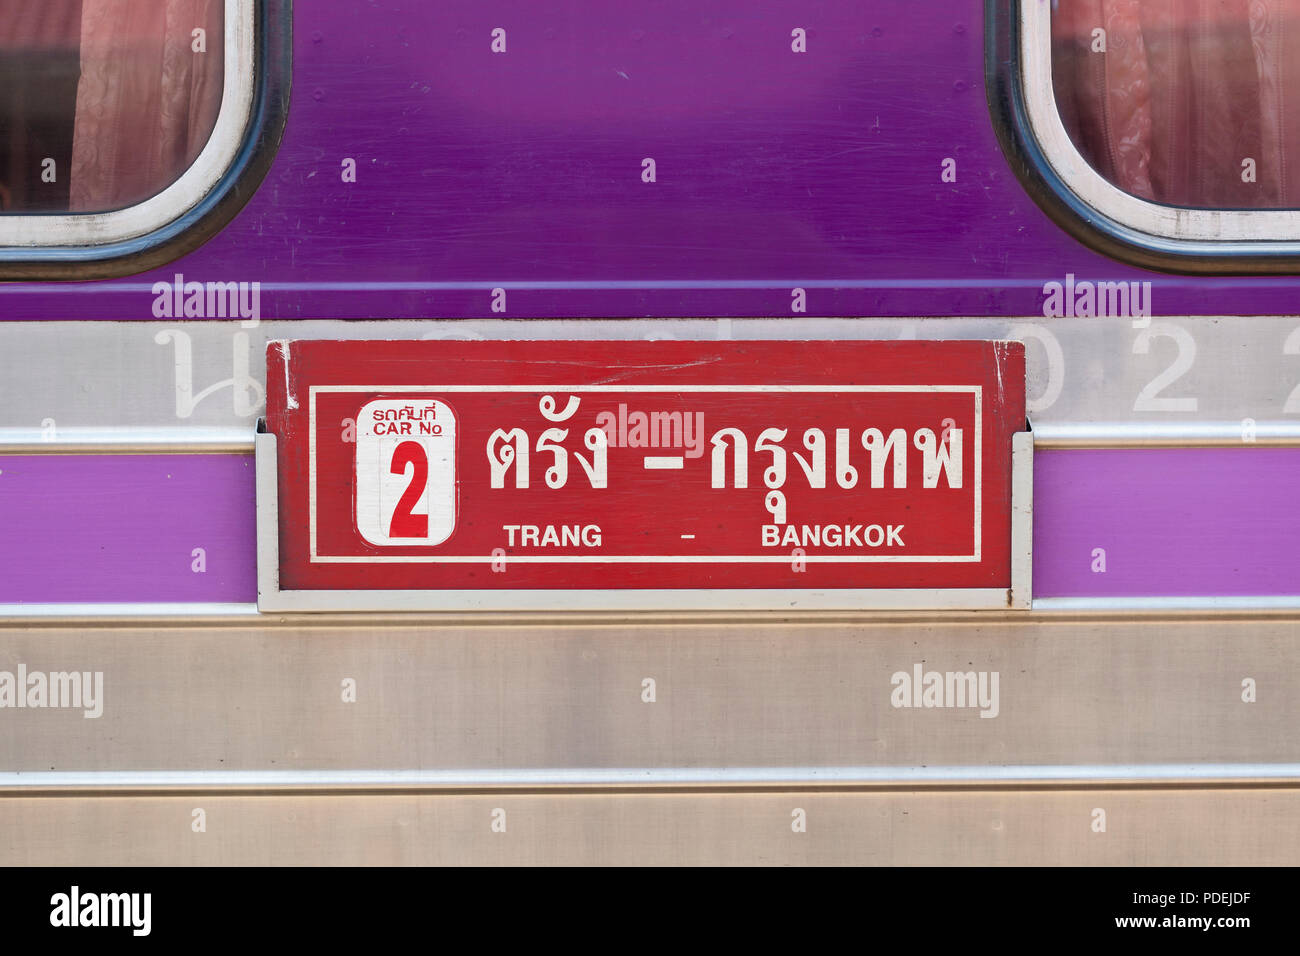 Bangkok to Trang  train carriage sign, Thailand Stock Photo